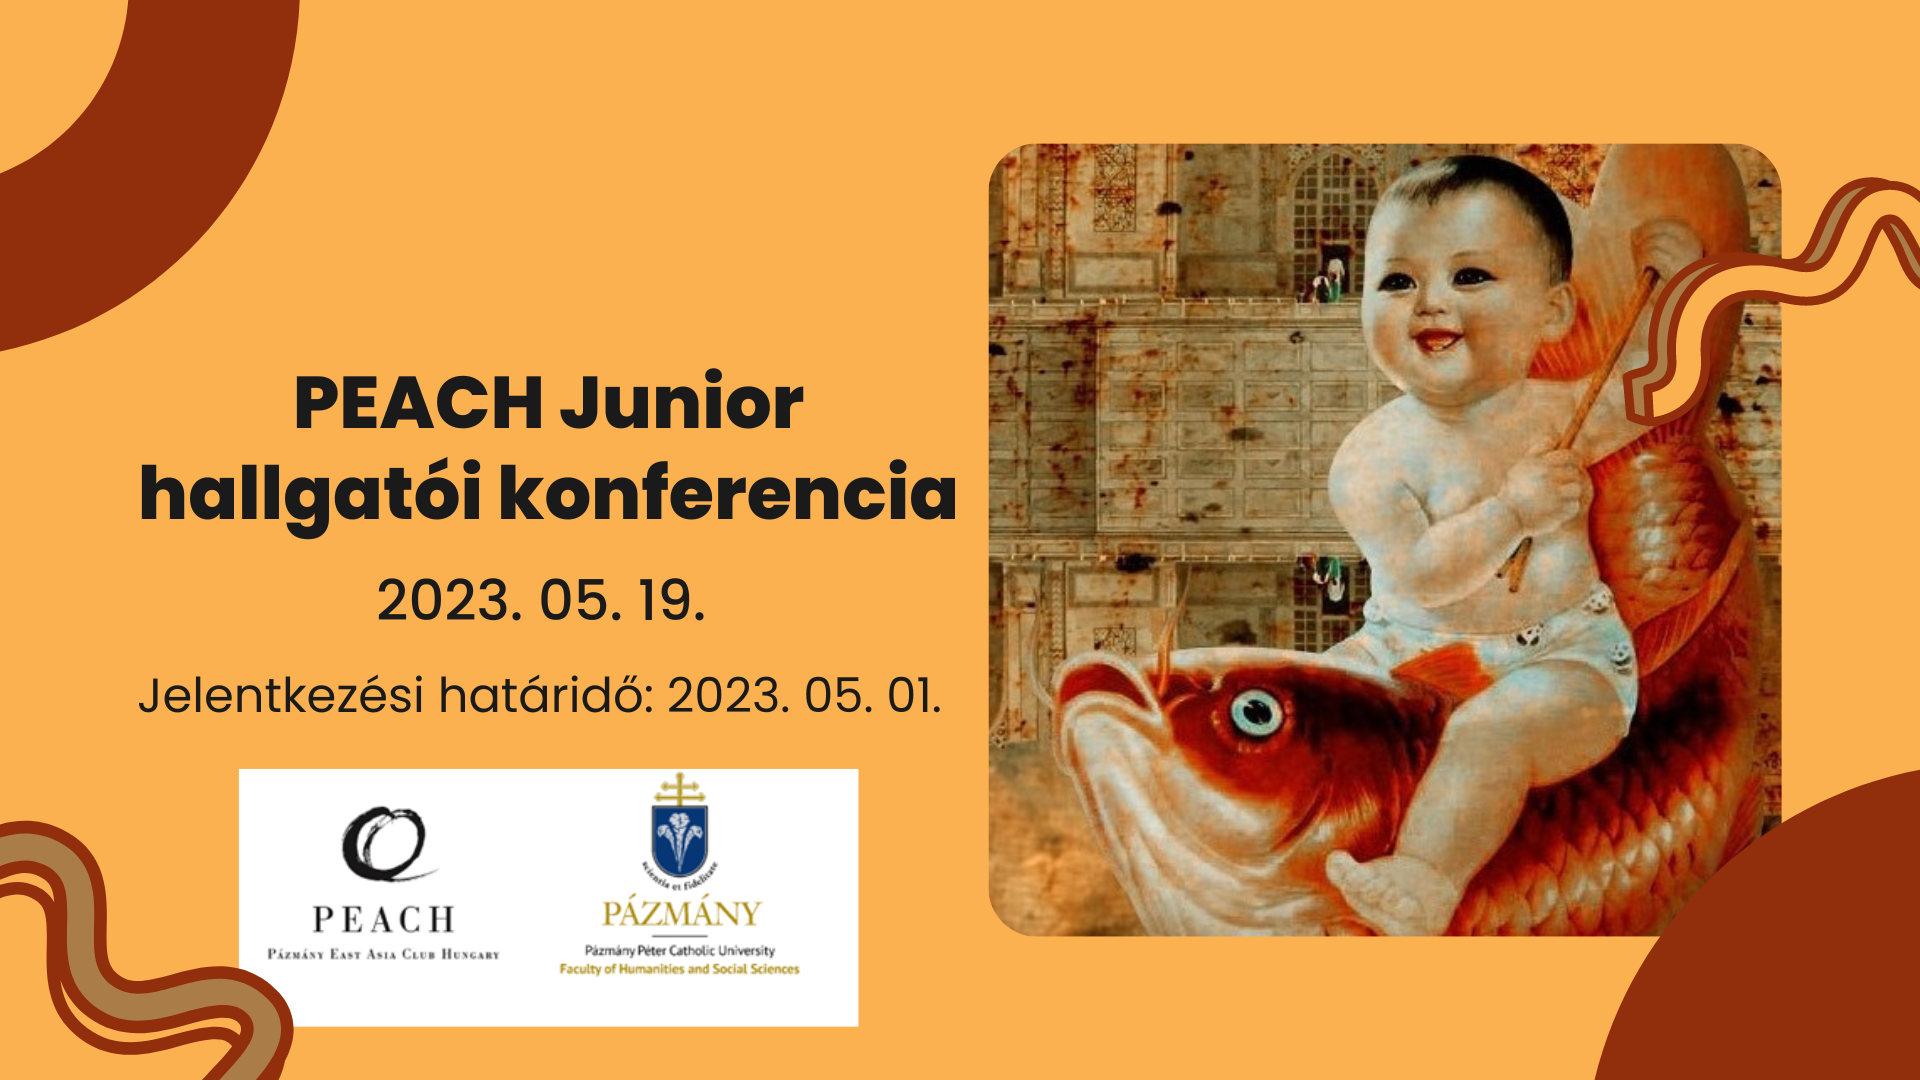 PEACH Junior hallgatói konferencia - felhívás